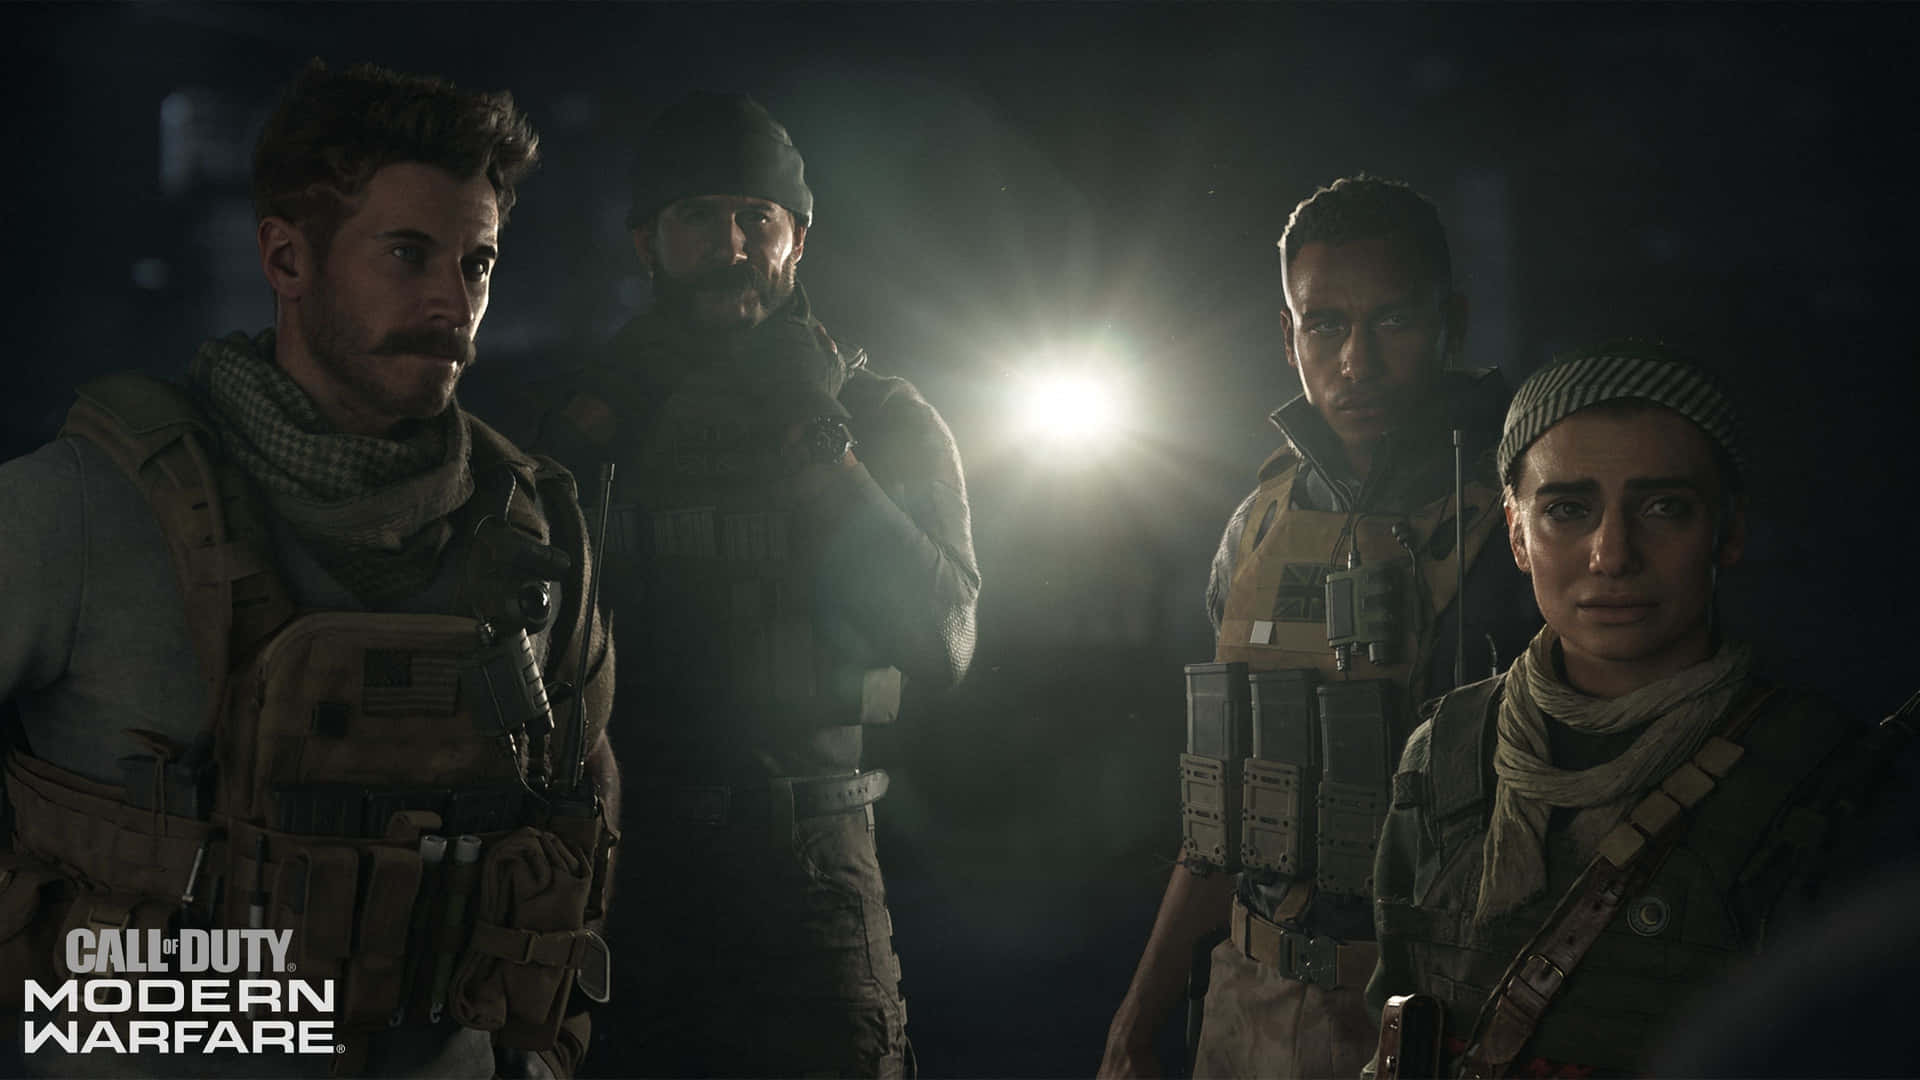 4kcall Of Duty Modern Warfare Bakgrundsbild På När En Styrka Utan Masker